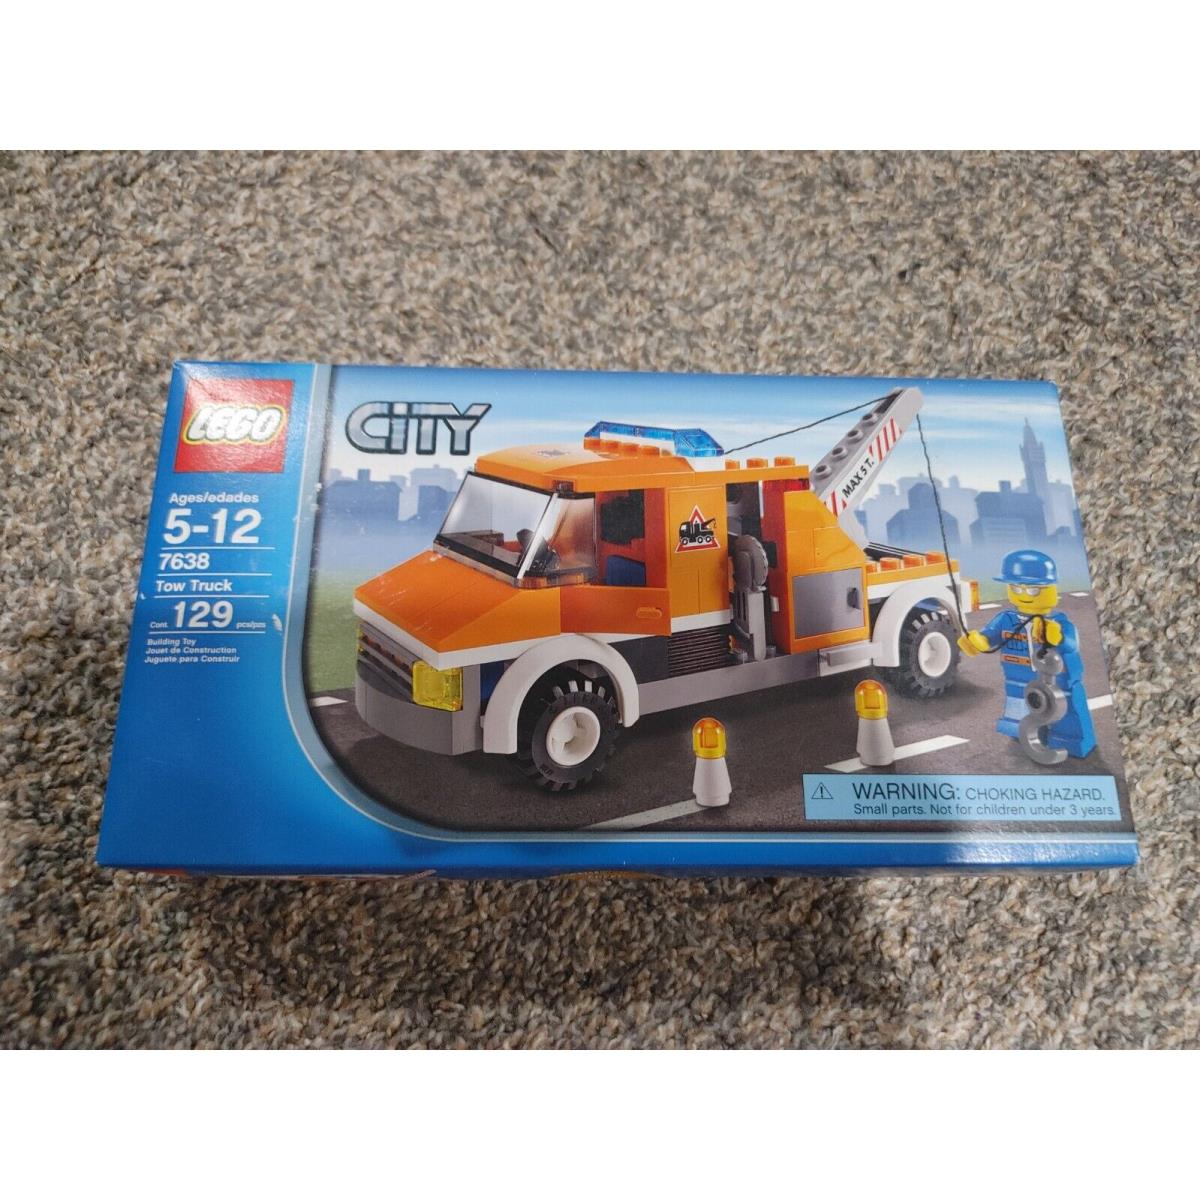 7638 Lego City Tow Truck Nisb